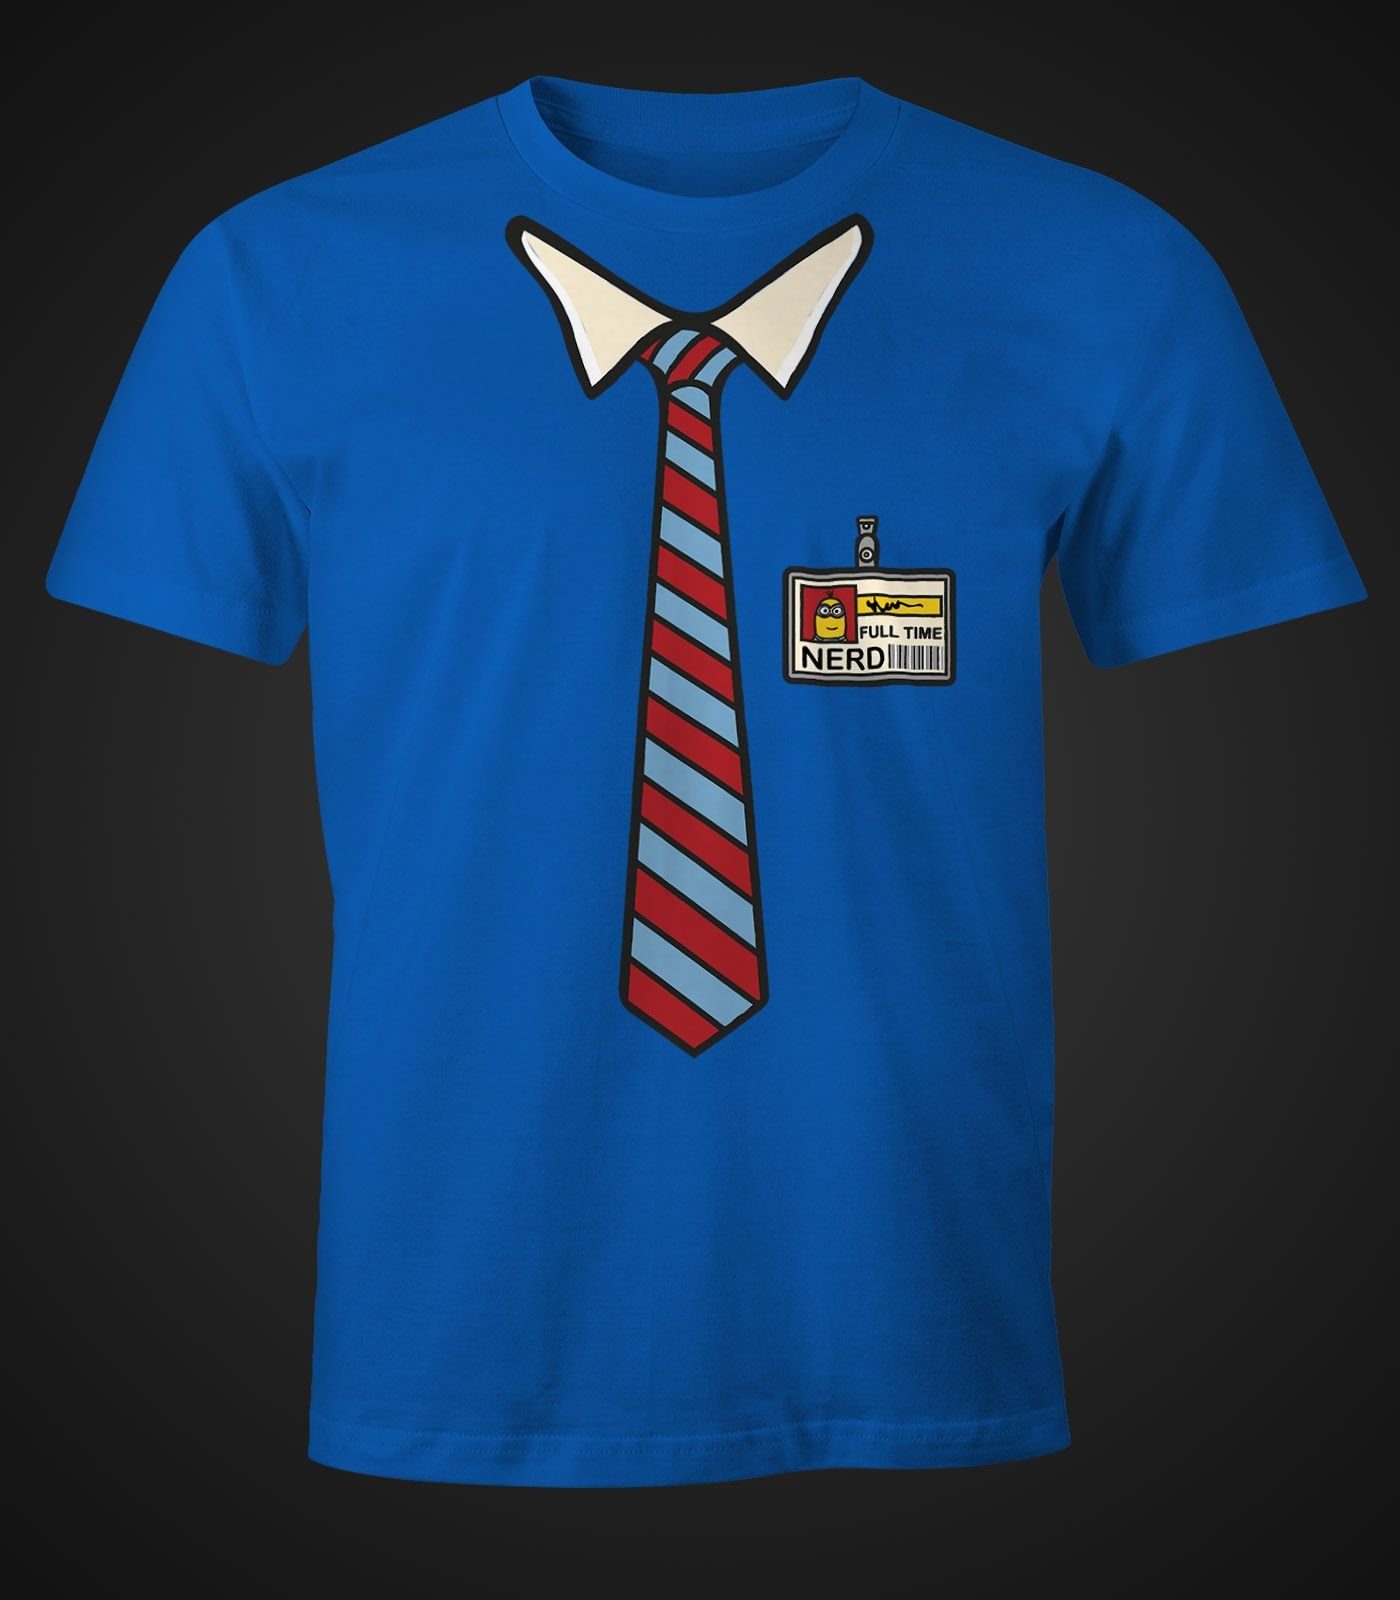 MoonWorks Print-Shirt Herren T-Shirt Full Fun-Shirt Moonworks® mit Print blau Nerd Time Geek